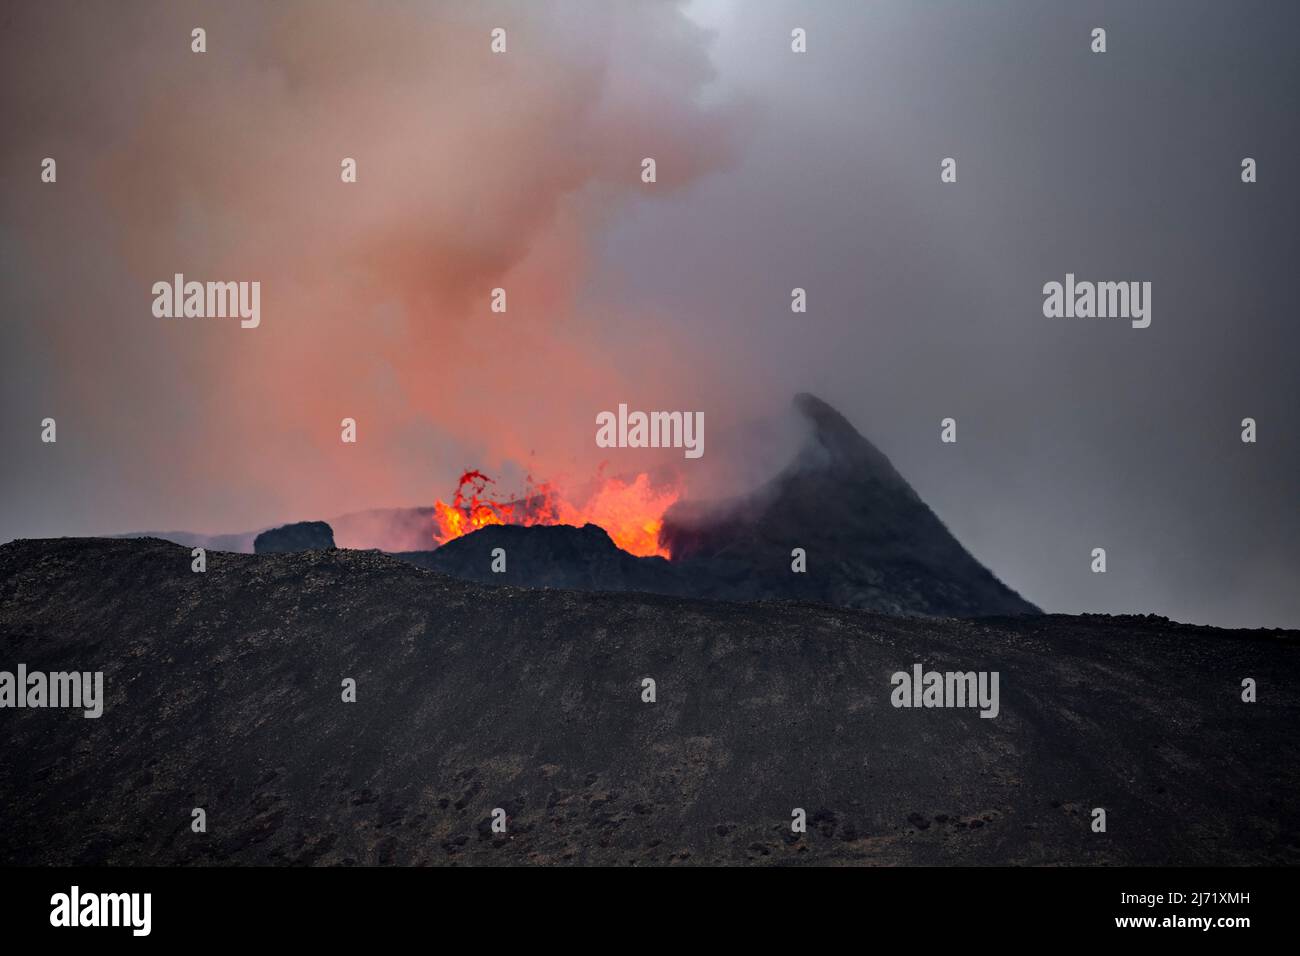 Rauchender aktiver Vulkankrater, Gluehende Lava spritzt ueber den Kraterrand, Vulkanausbruch, aktiver Tafelvulkan Fagradalsfjall Stock Photo